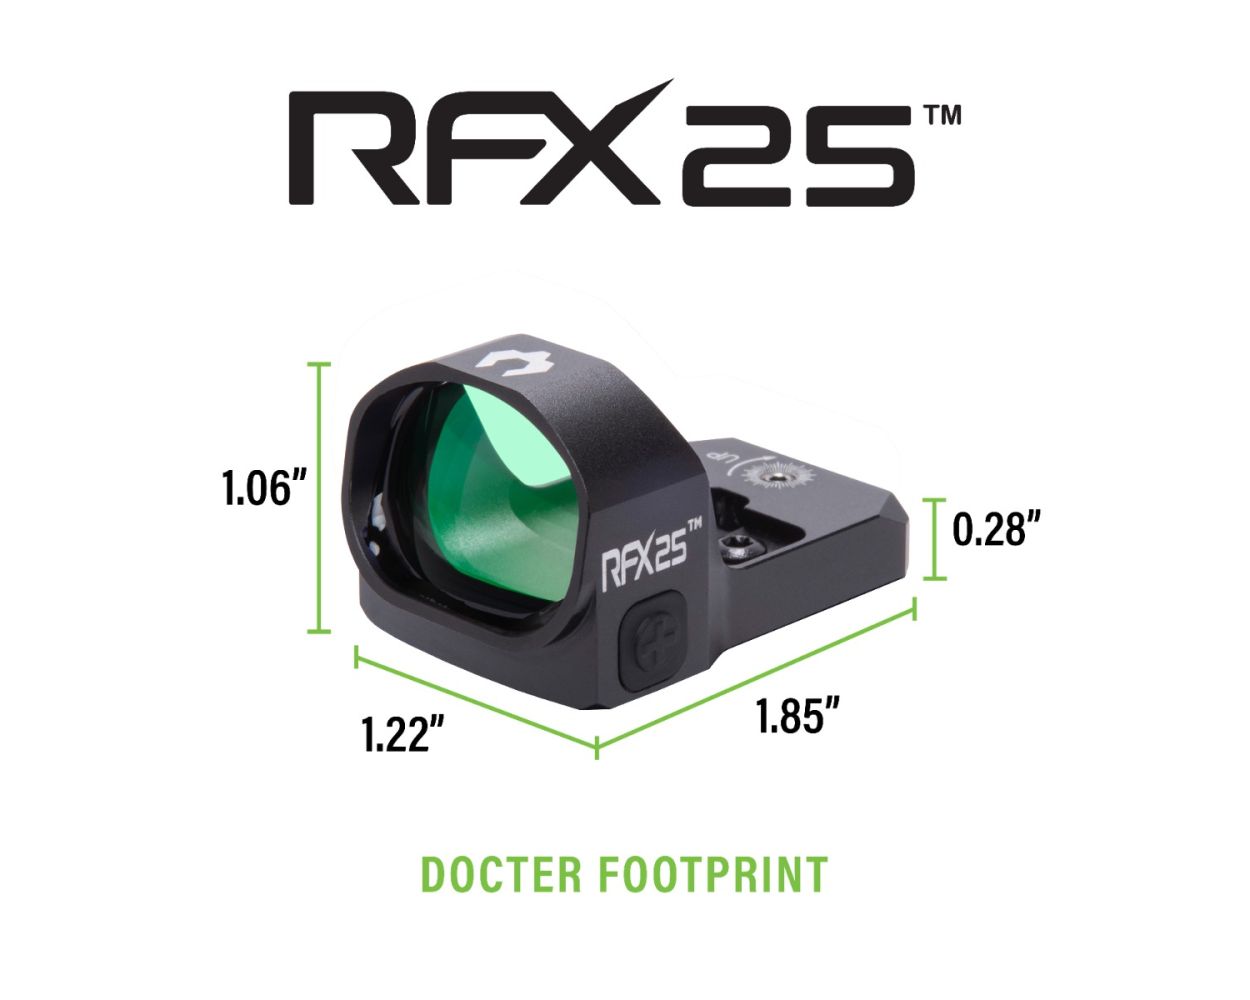 Viridian RFX 25 3 MOA Green Dot Sight - Docter/DPP Footprint - 6061 T6 Aluminum